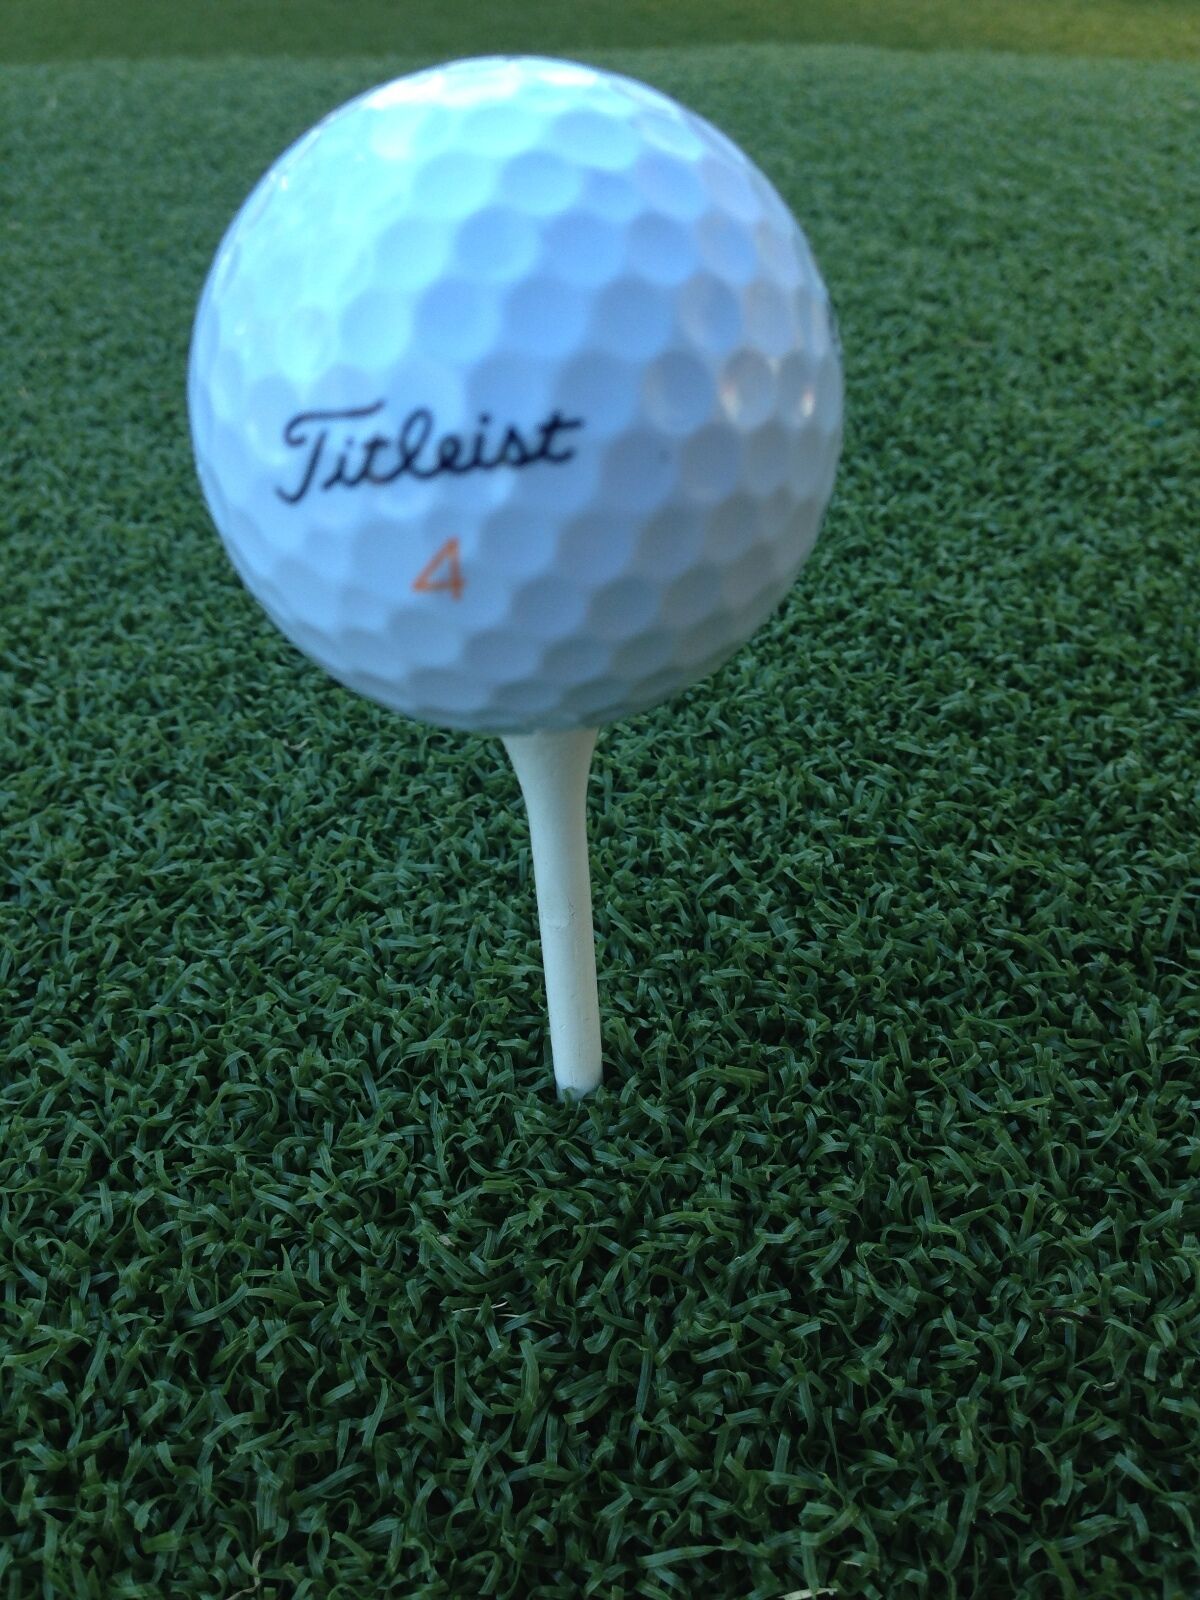 Thick High-Quality Golf Mats 3' x 5' Premium Golf Practice Turf Mat - The Golfing Eagles